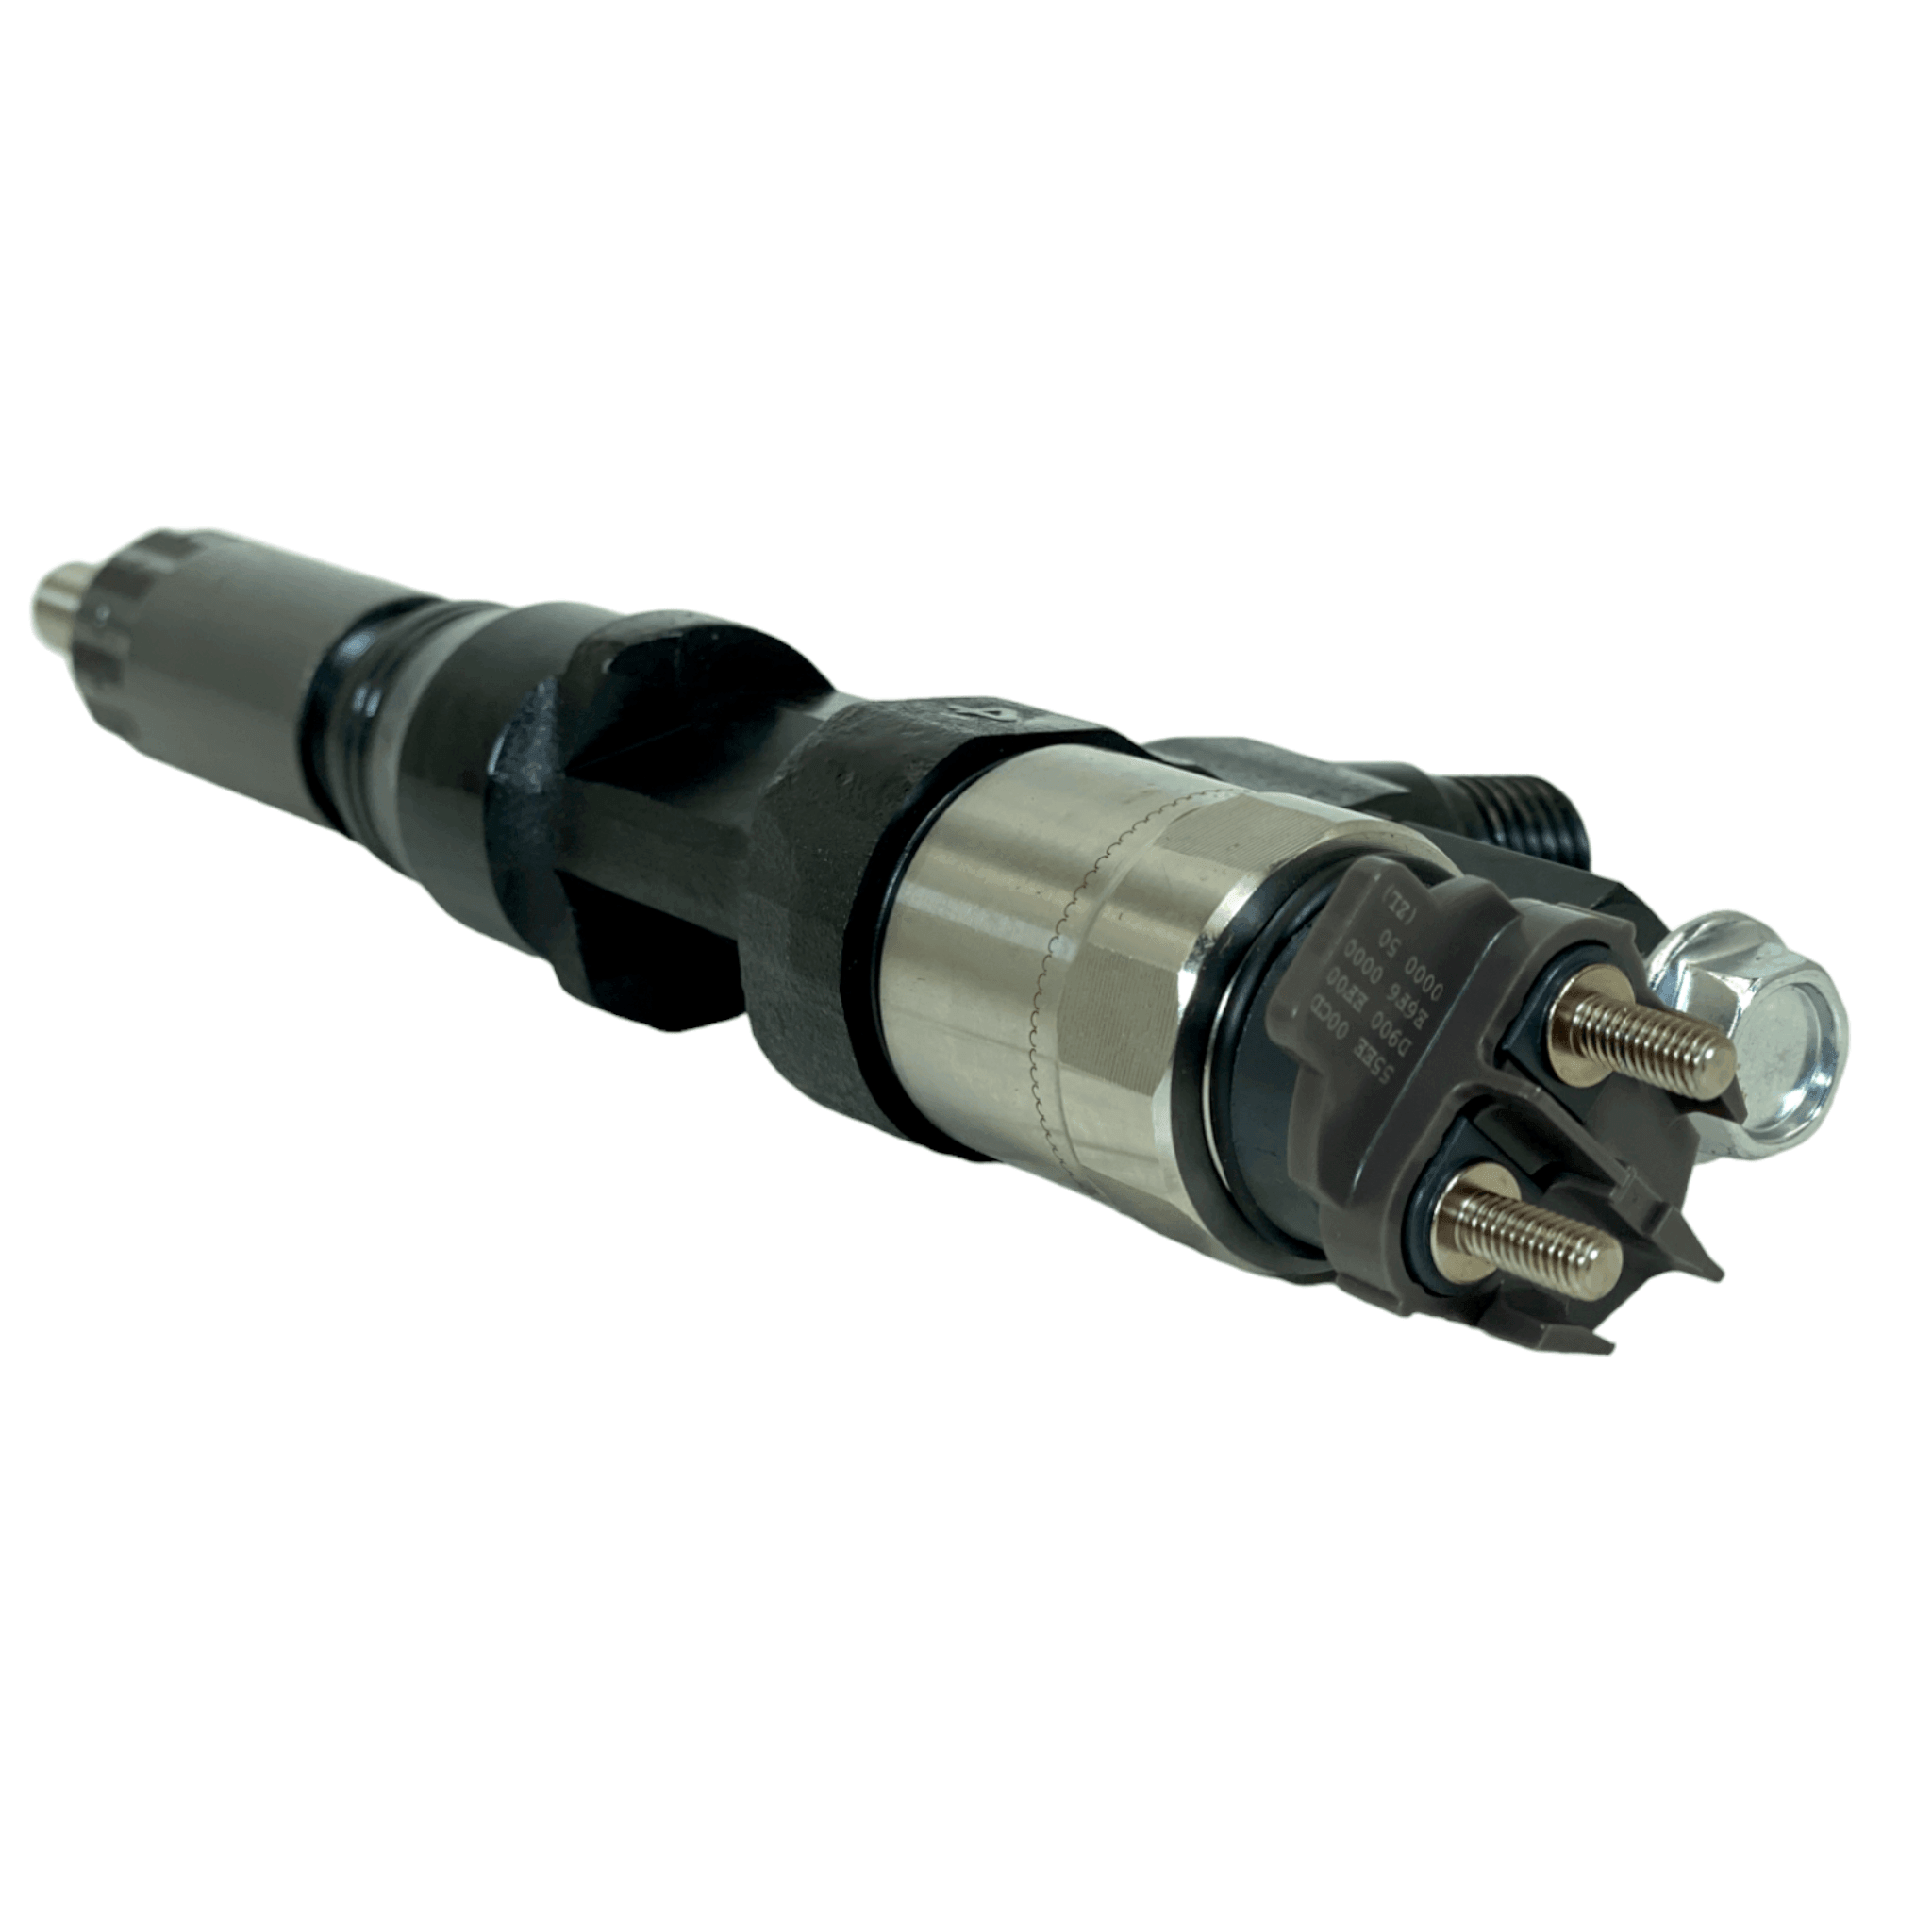 0950008095 Genuine Hino Fuel Injector - ADVANCED TRUCK PARTS